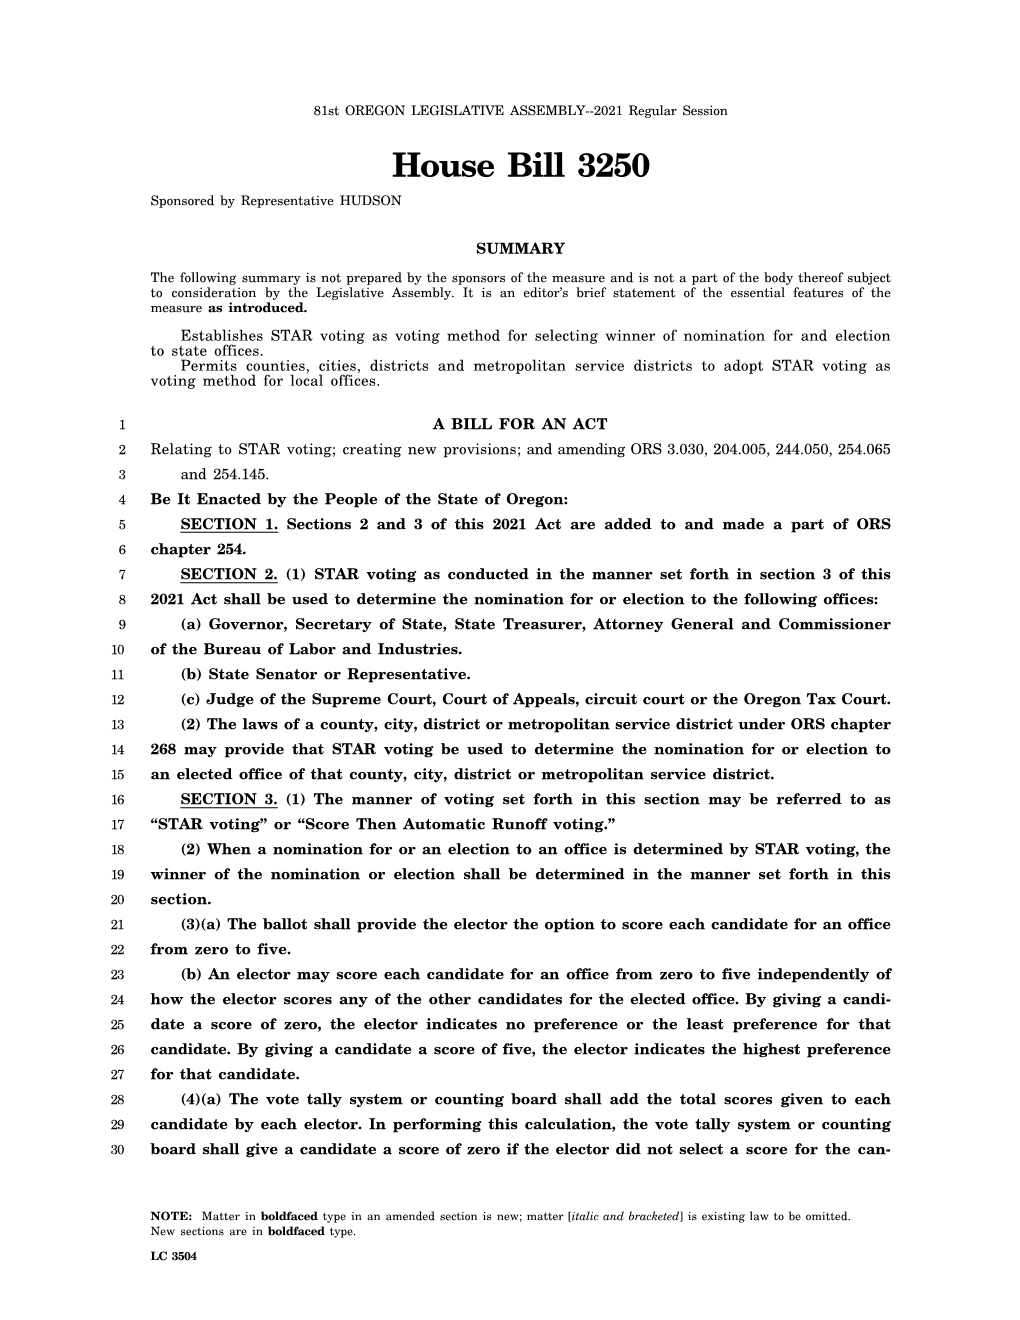 House Bill 3250 Sponsored by Representative HUDSON